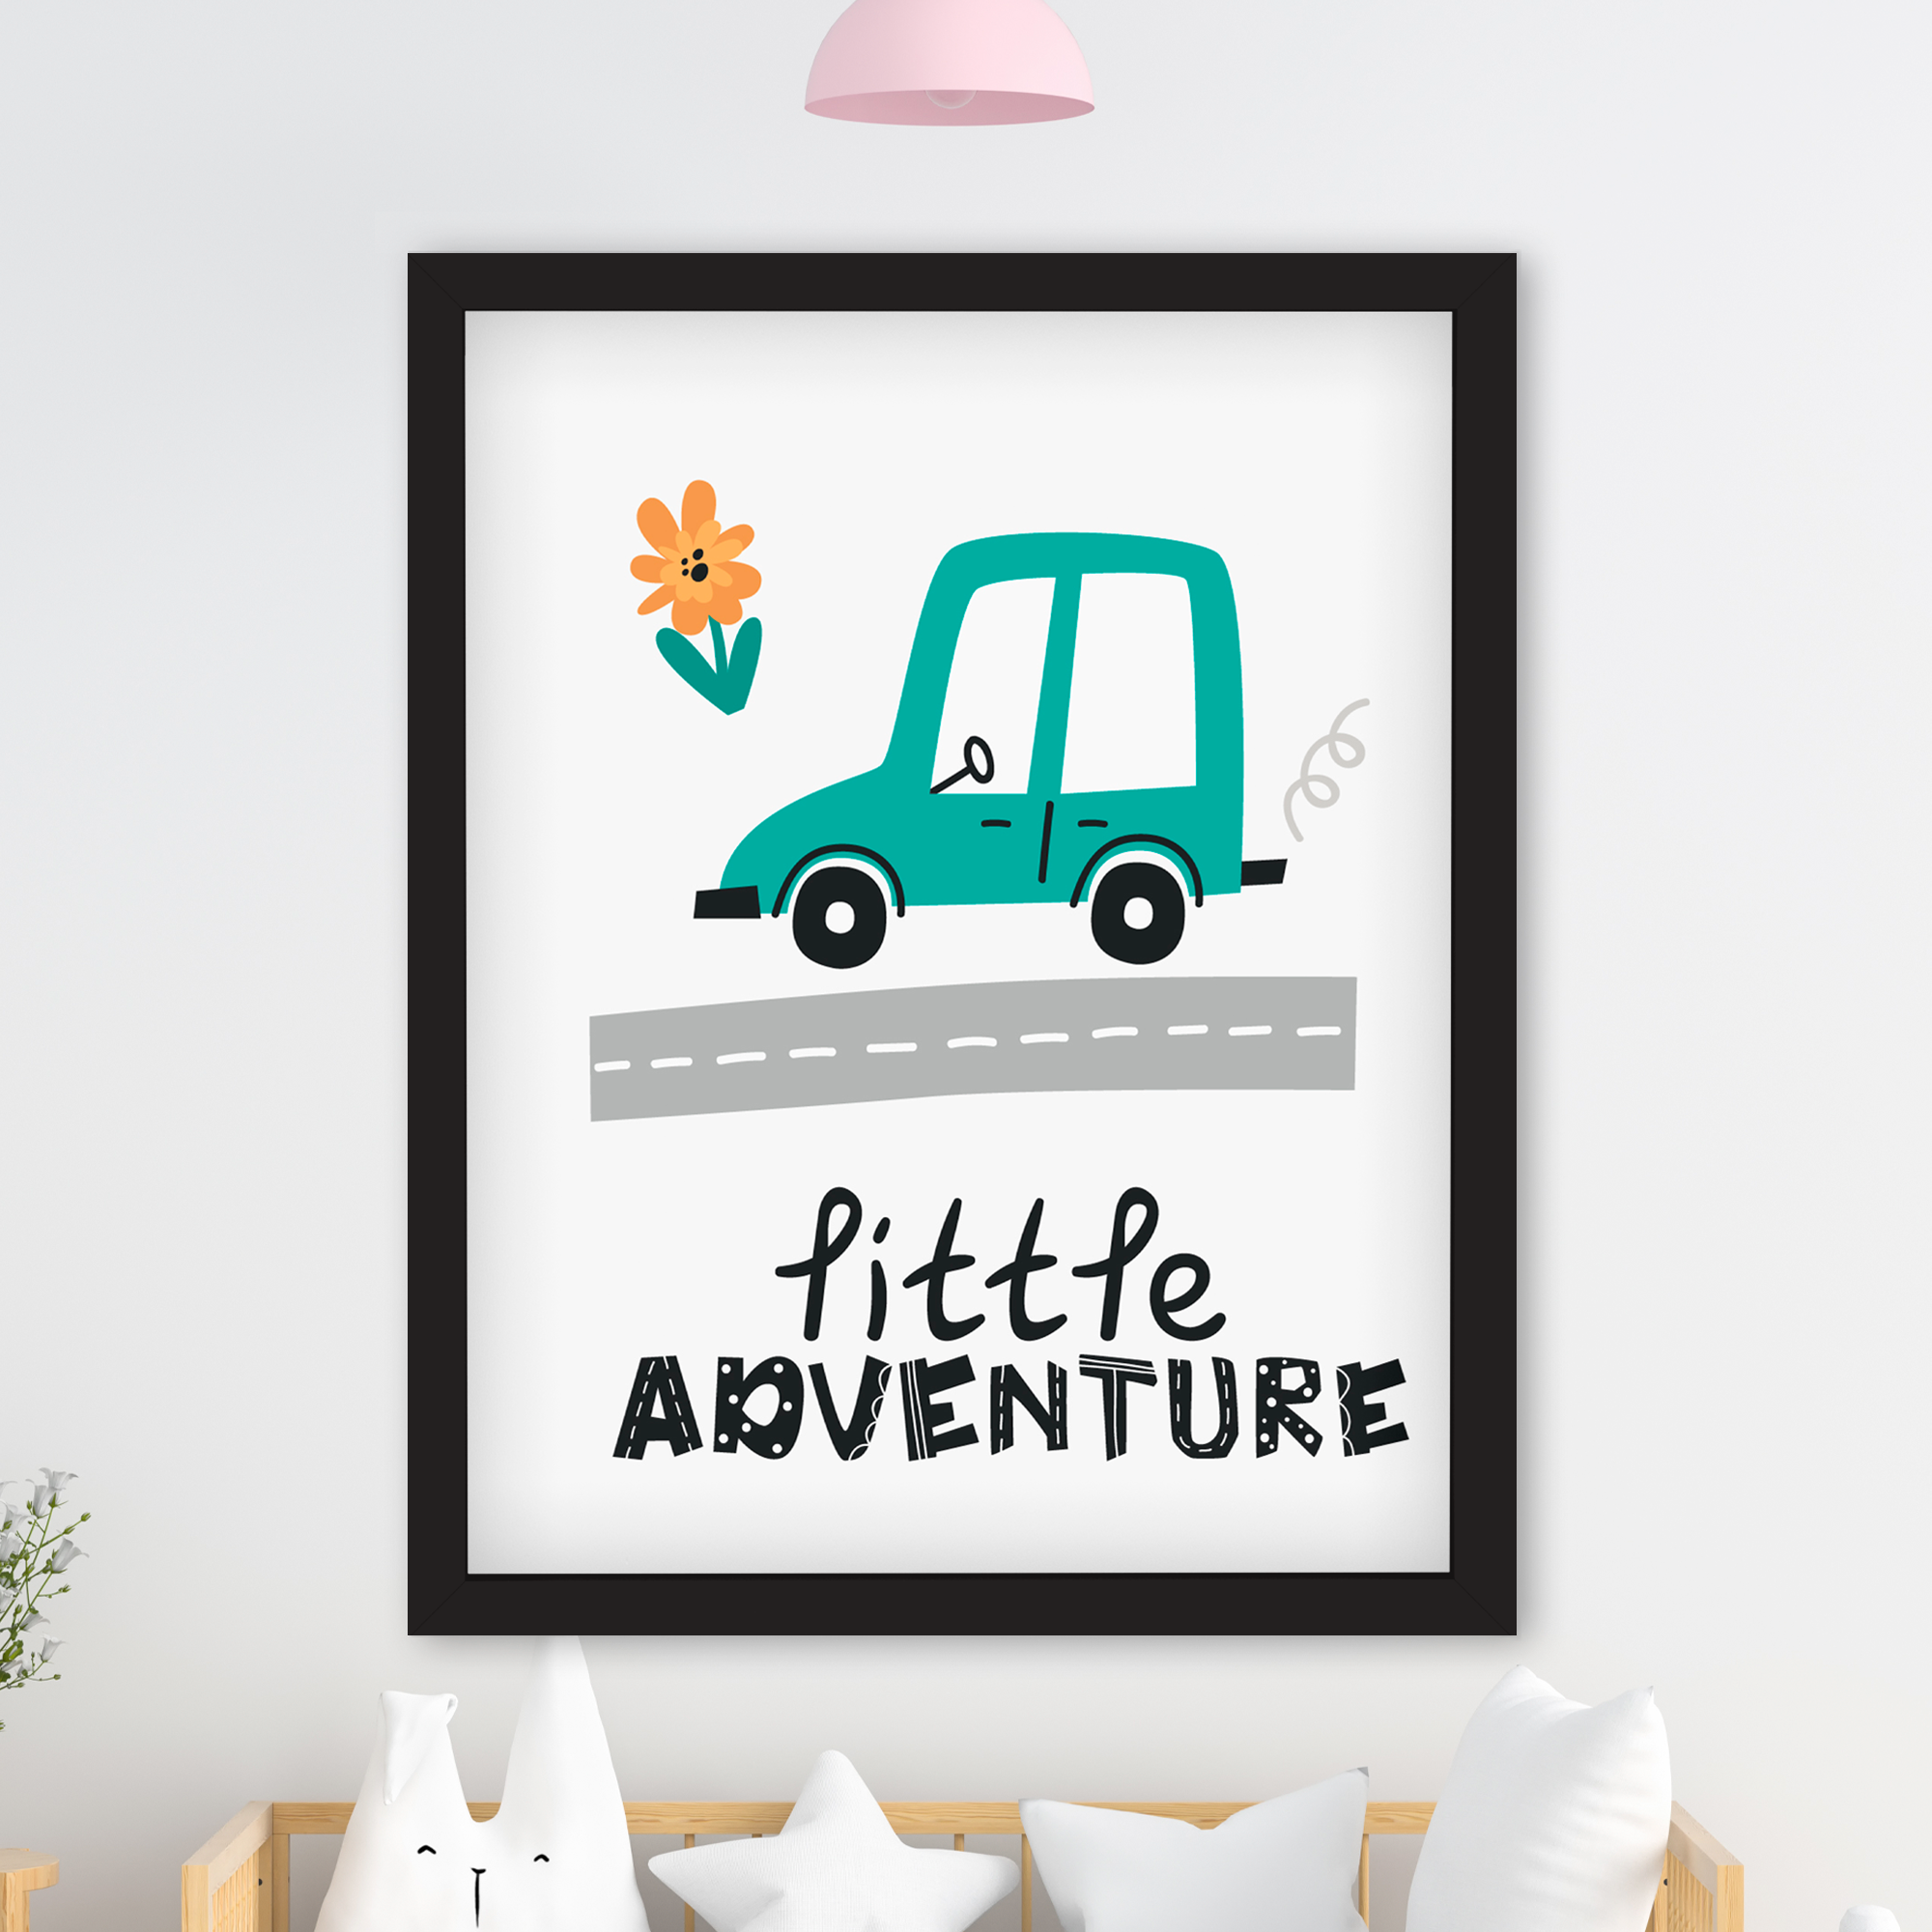 Little Adventure Poster